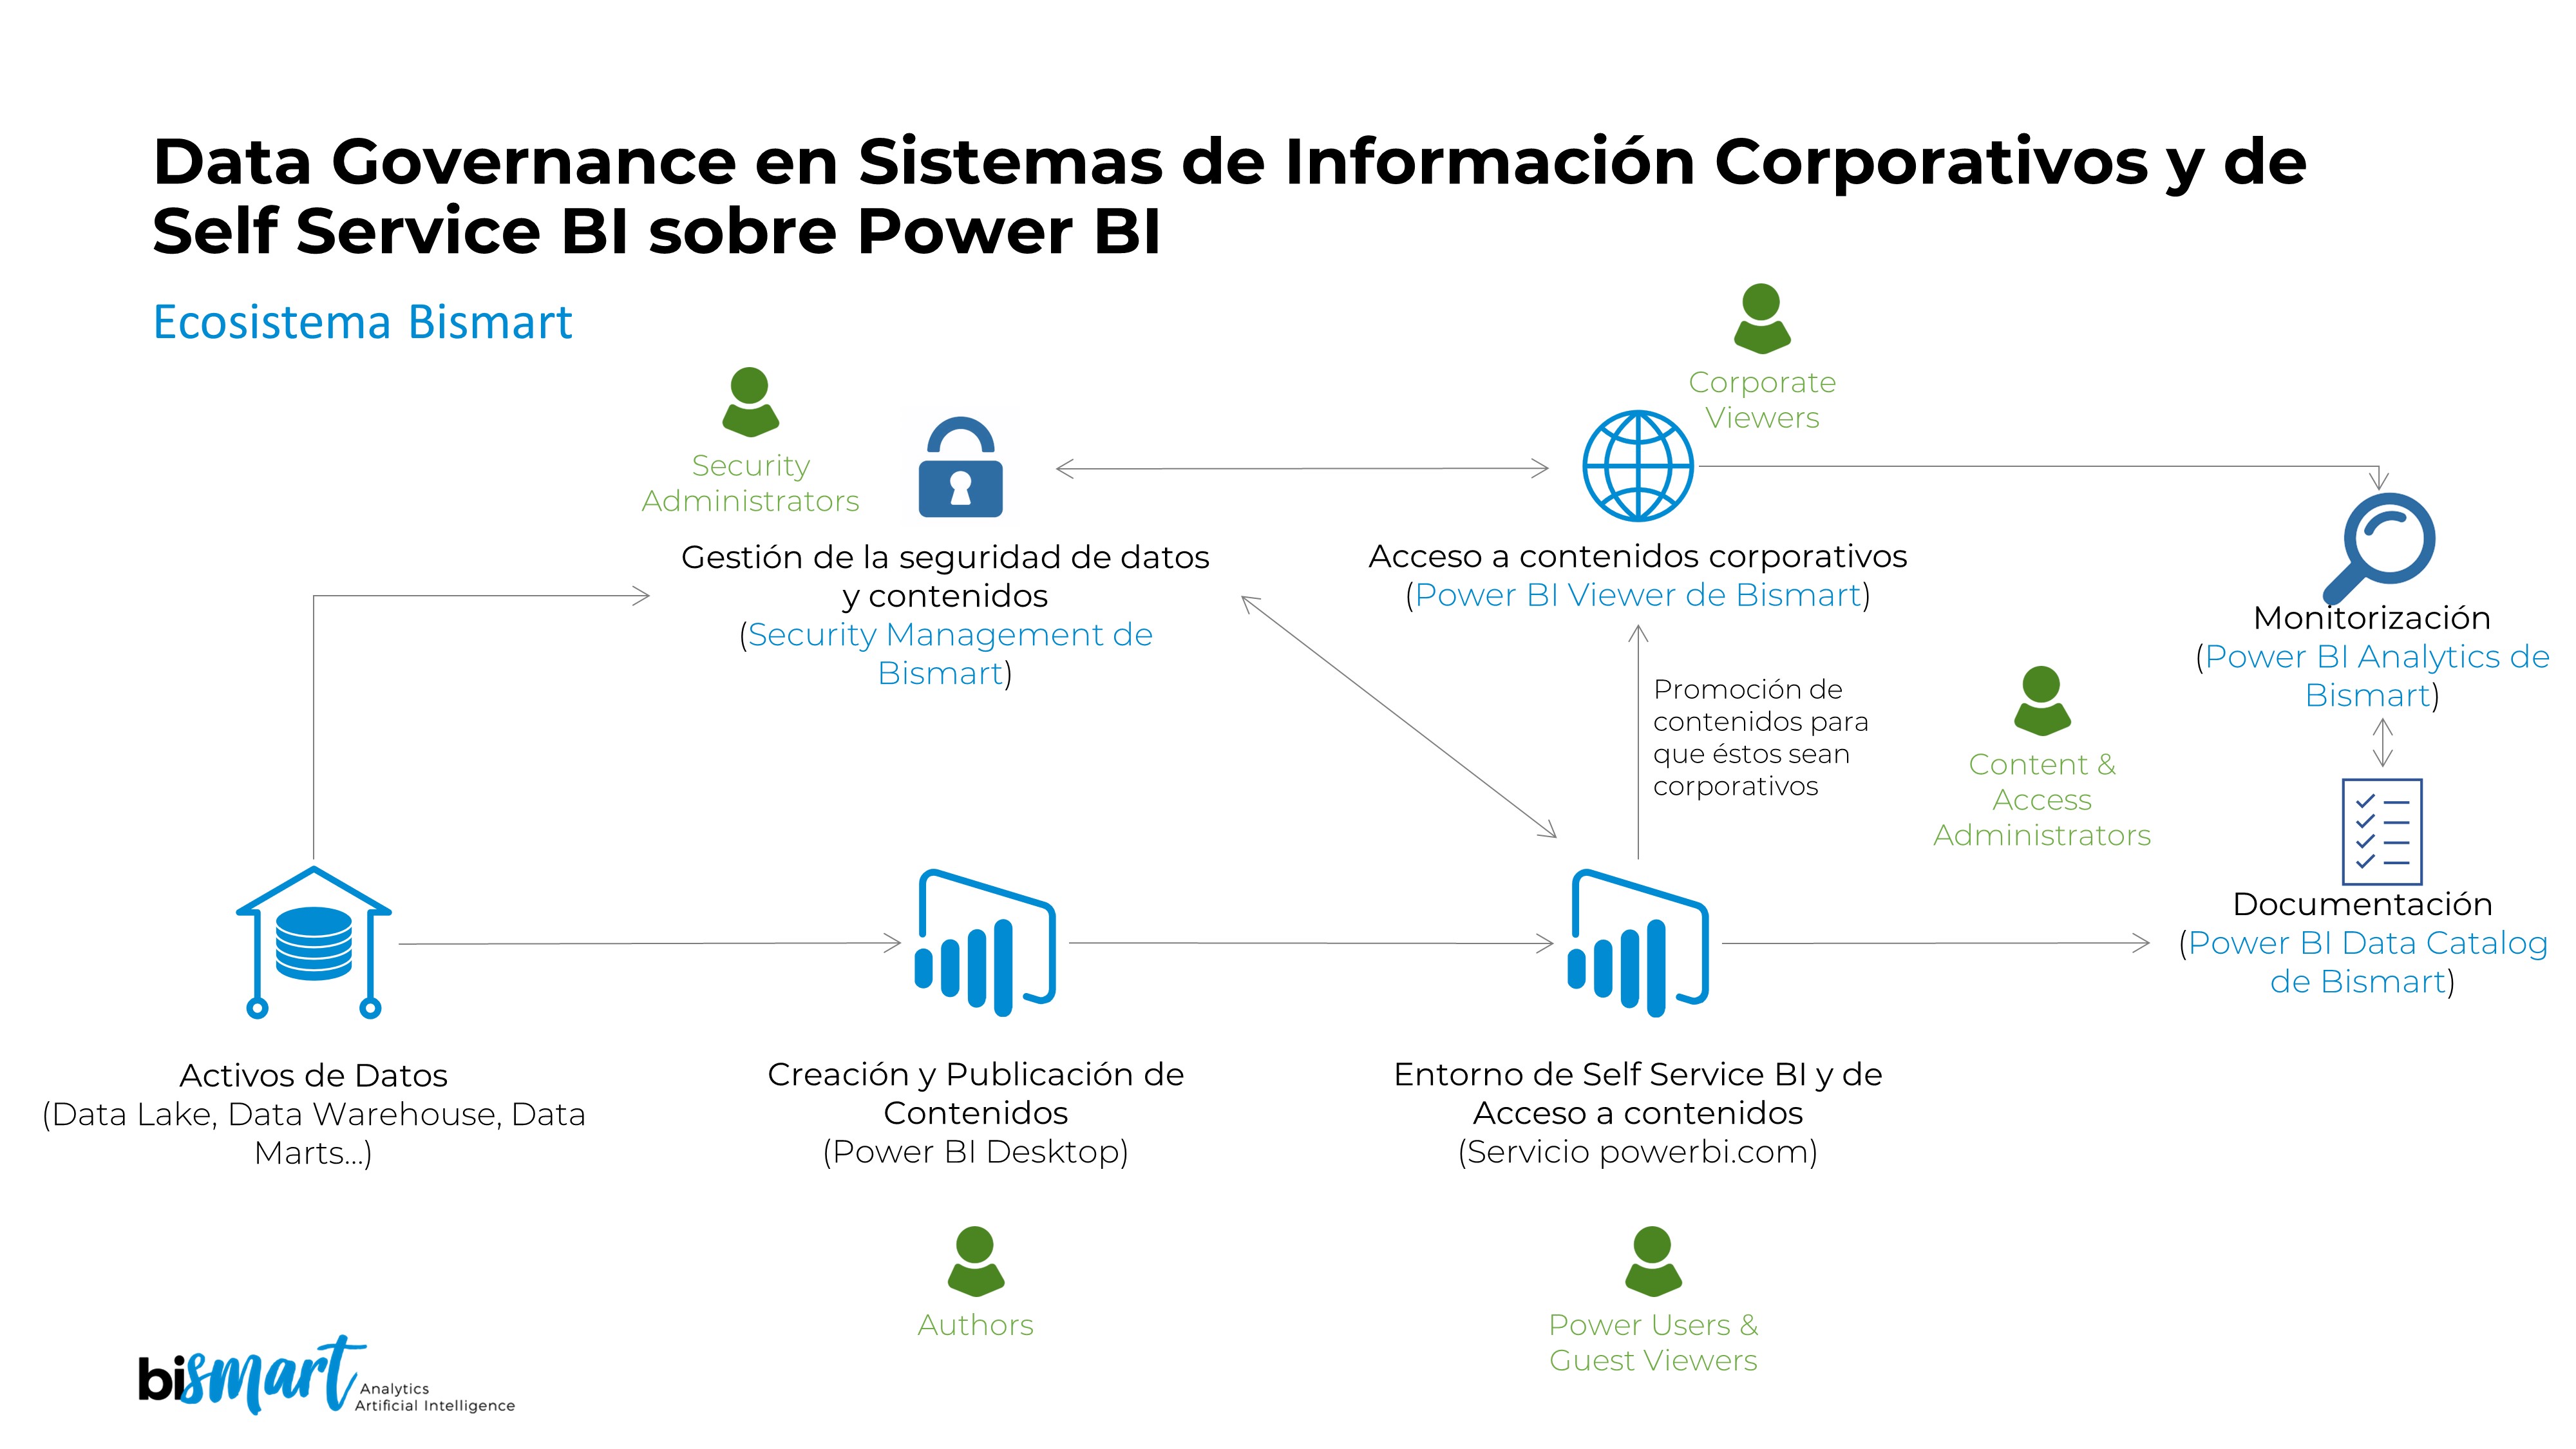 Power BI Data Governance entorno Bismart Power BI Data Catalog